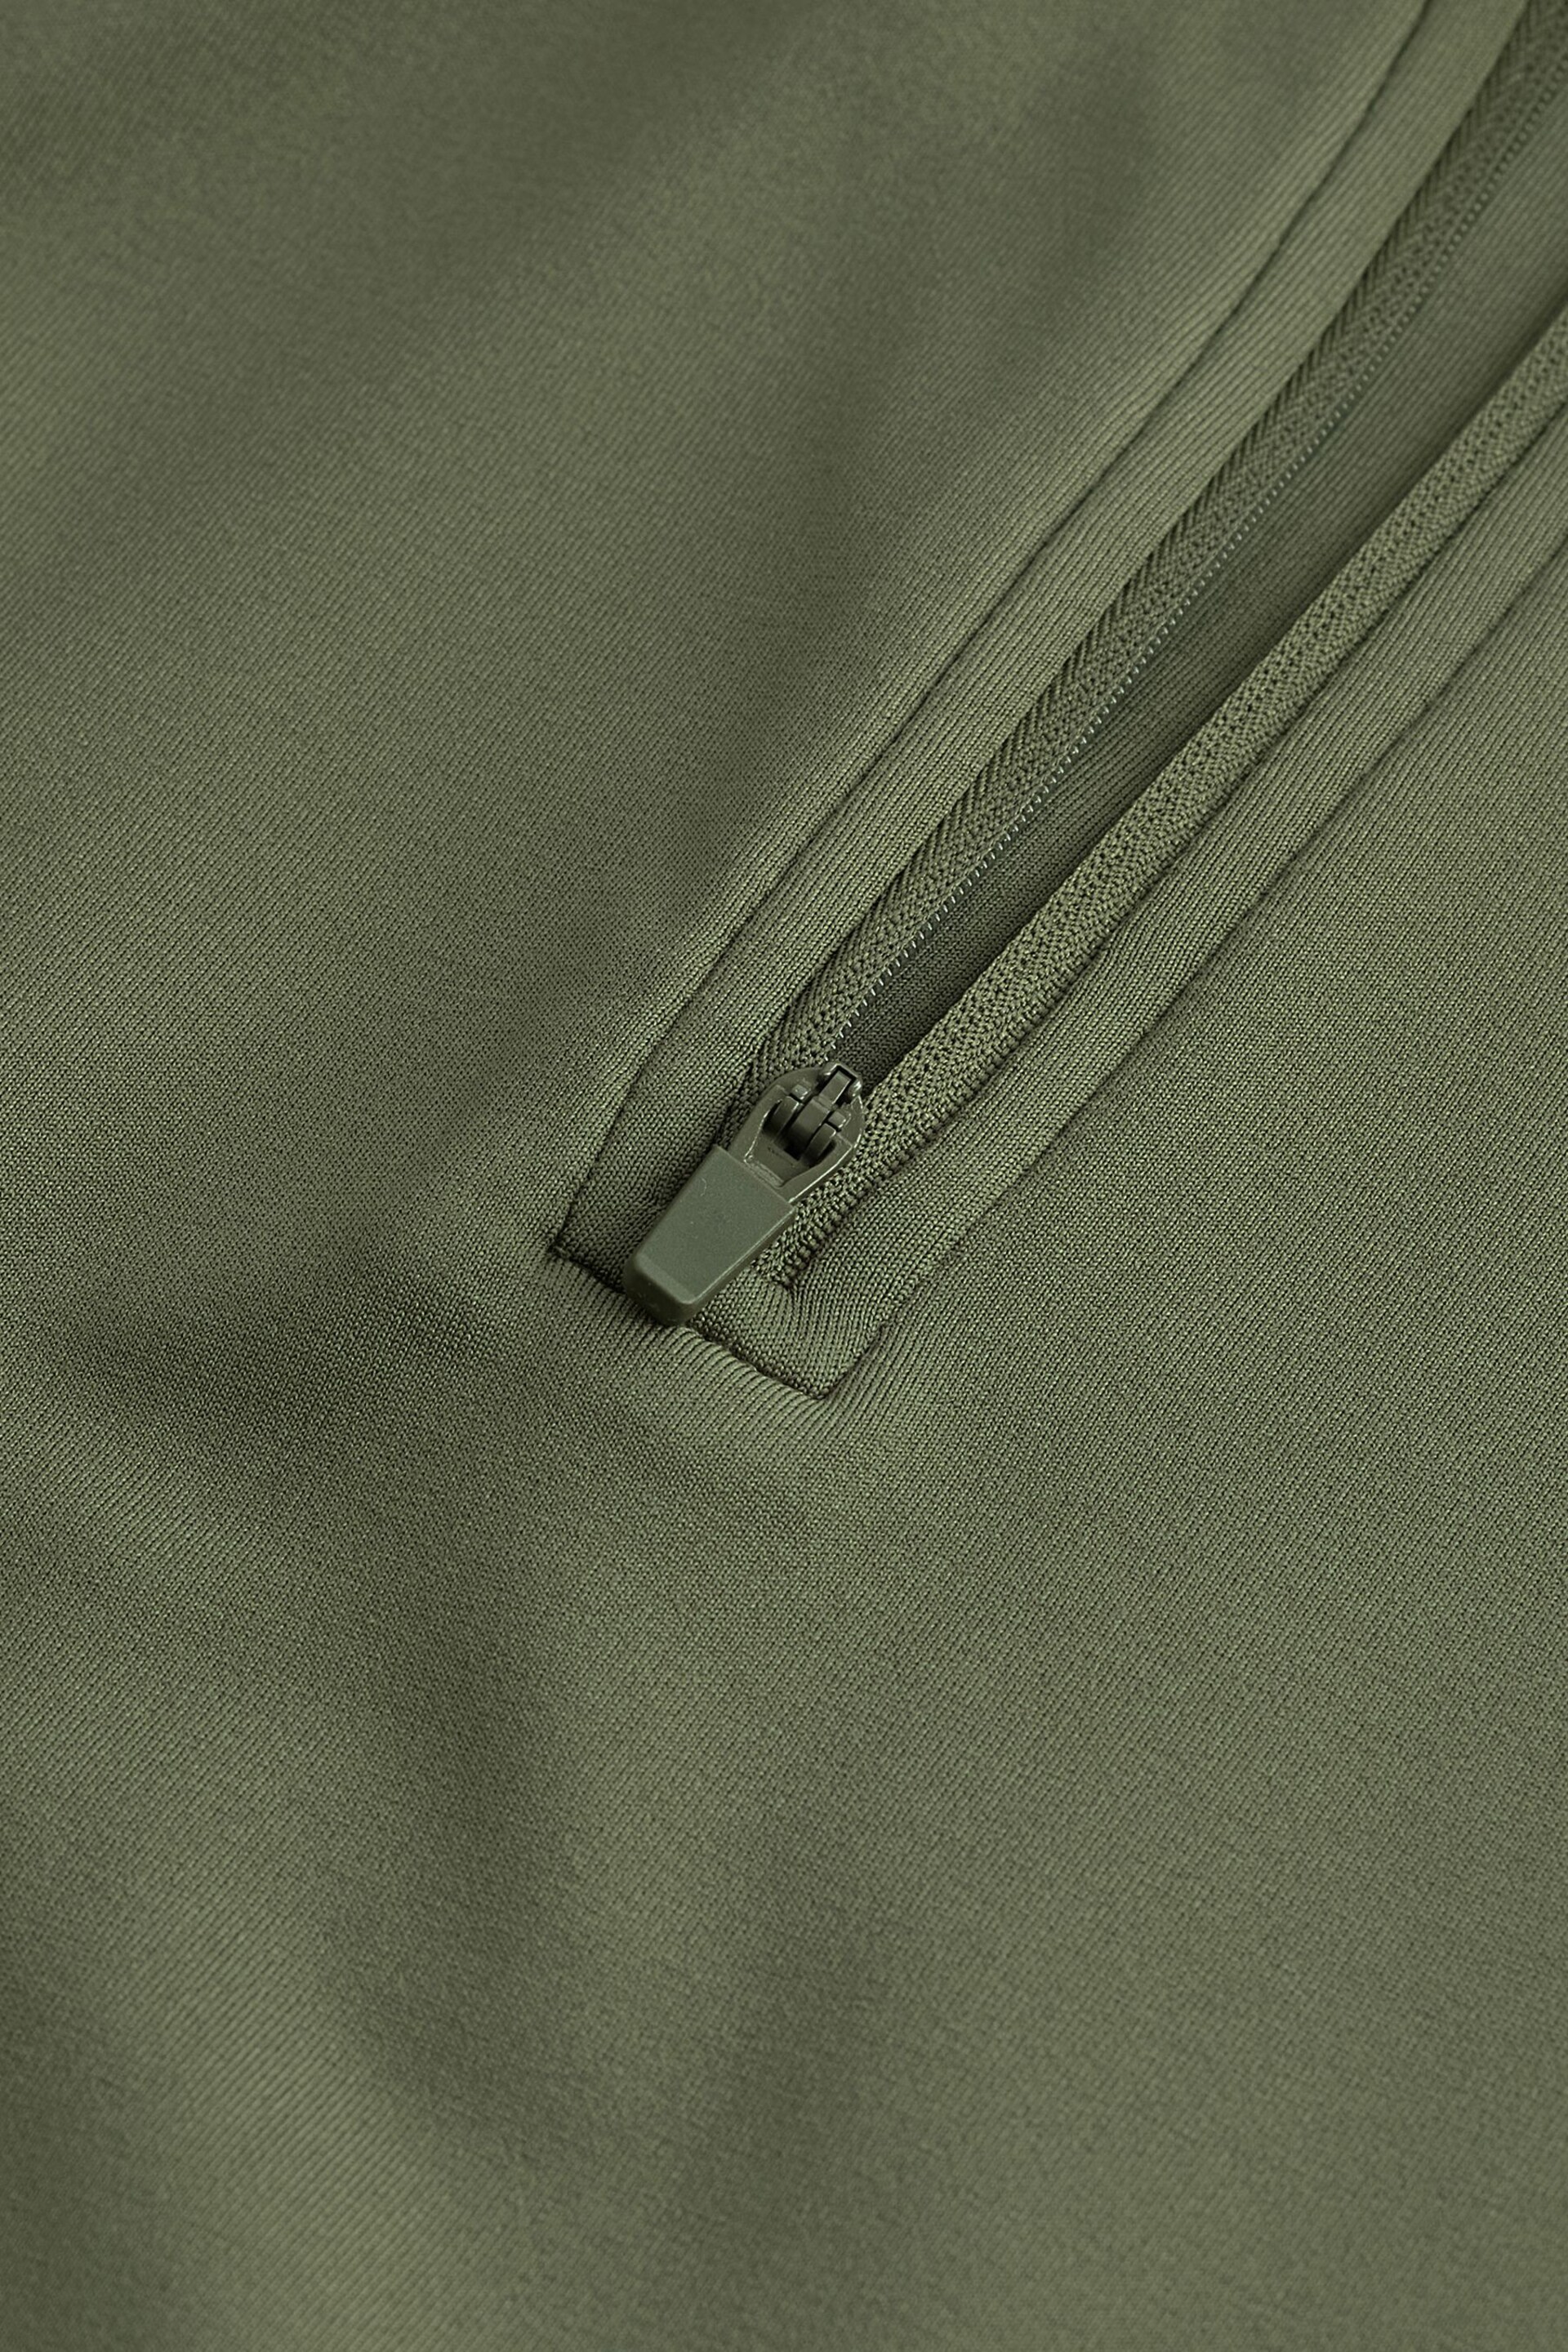 Khaki Green Elements Outdoor Fleece Lined Layer Top - Image 7 of 7